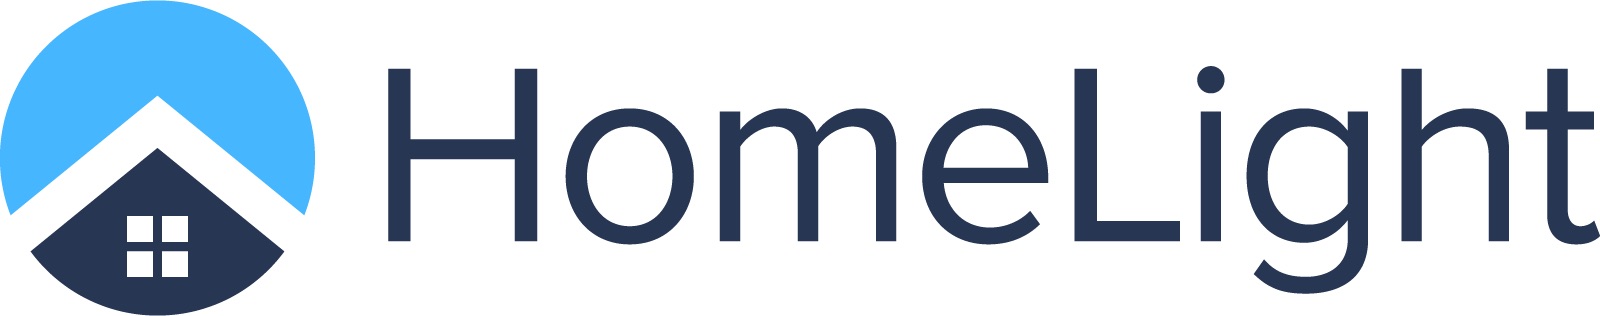 HomeLight logo wide